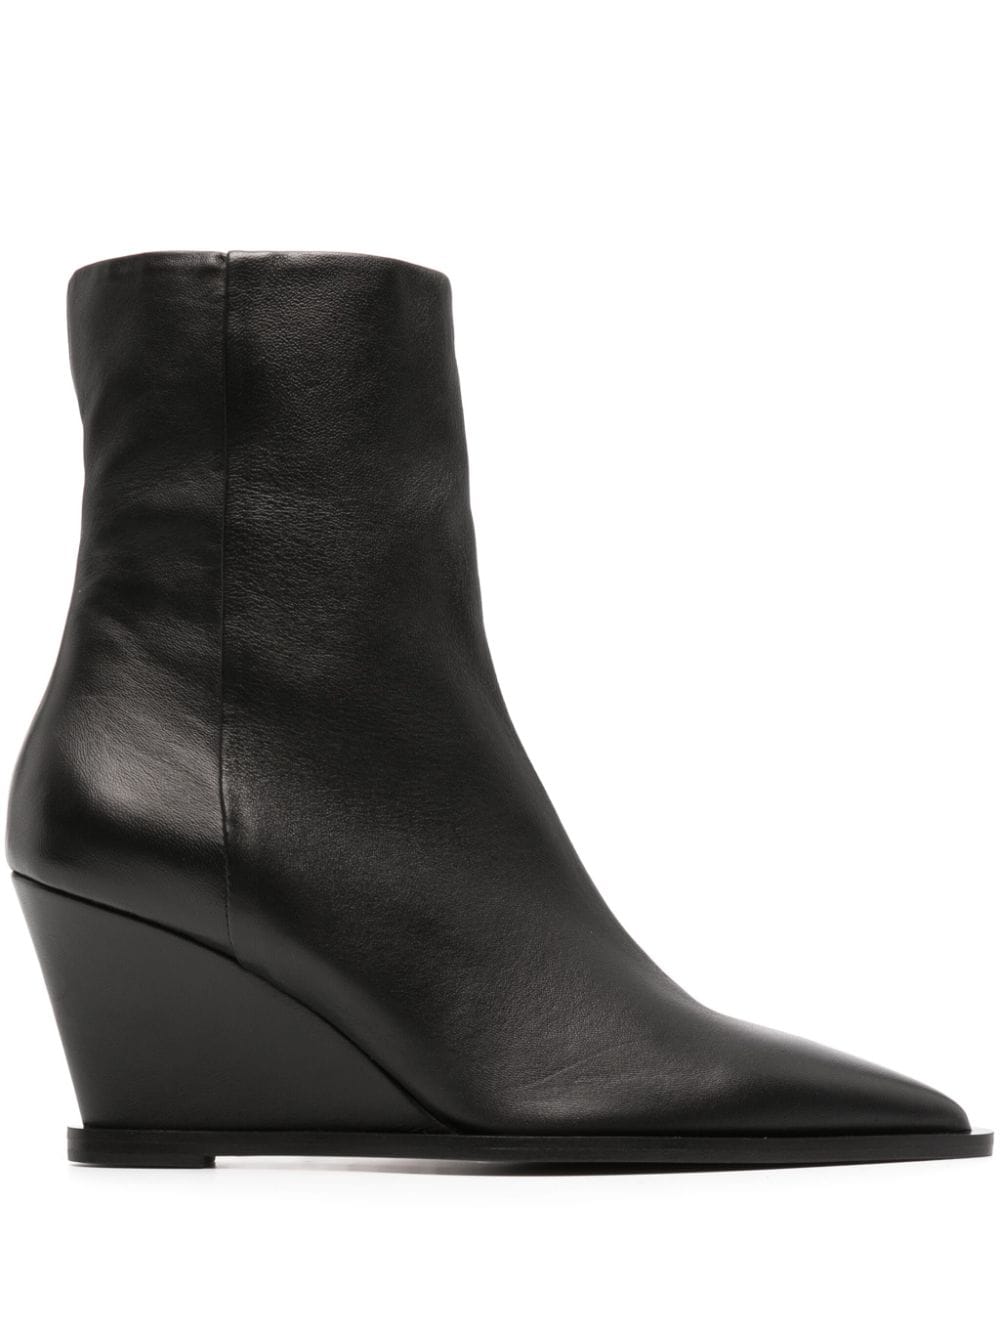 ATP Atelier Pratella 76mm leather boots - Black von ATP Atelier